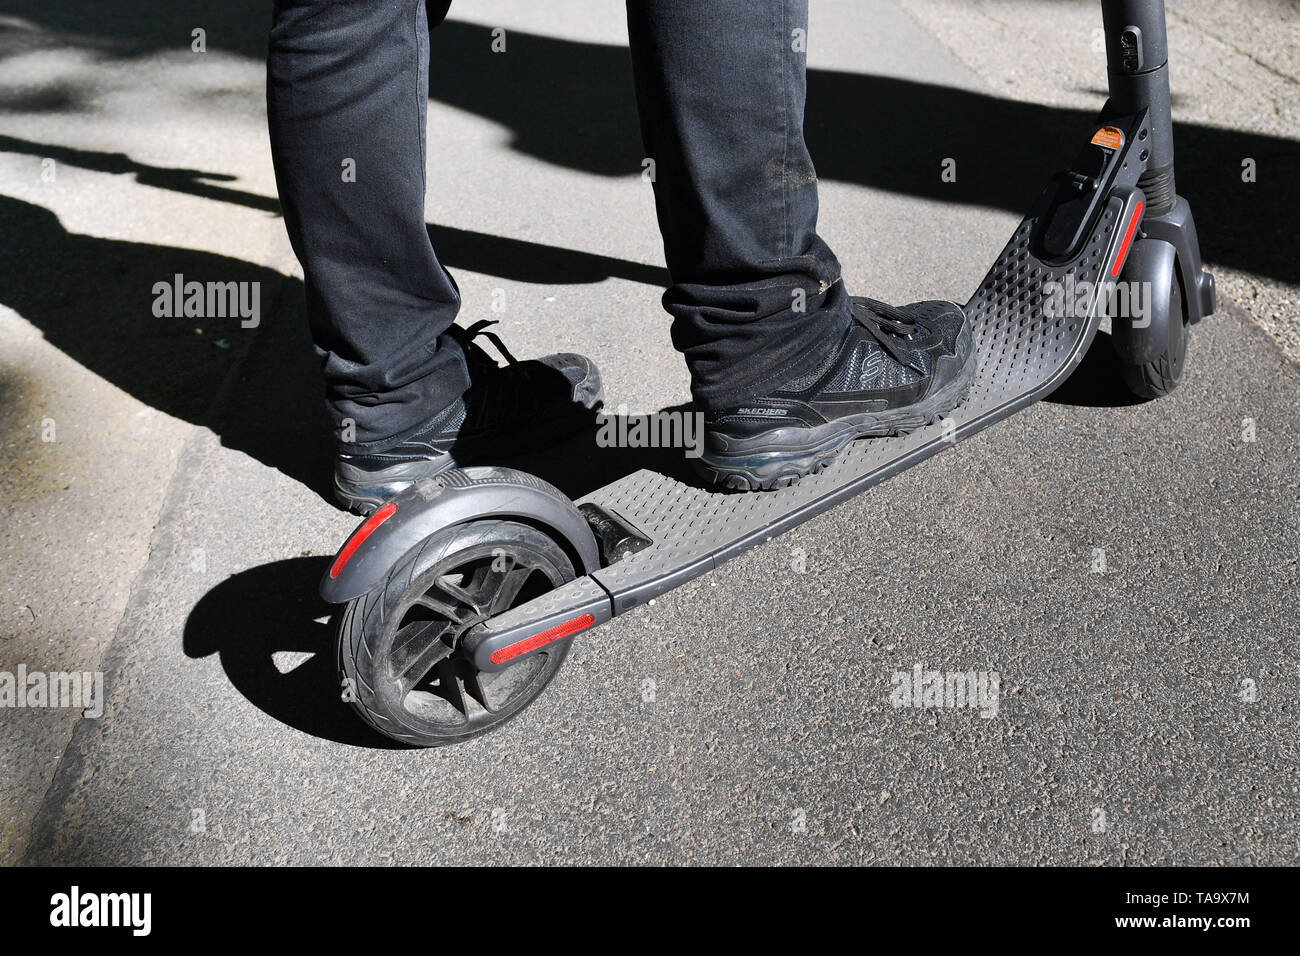 Stuttgart, Alemania. 23 Mayo, 2019. E-motos, scooters eléctricos, de cerca. | Uso de crédito en todo el mundo: dpa/Alamy Live News Foto de stock